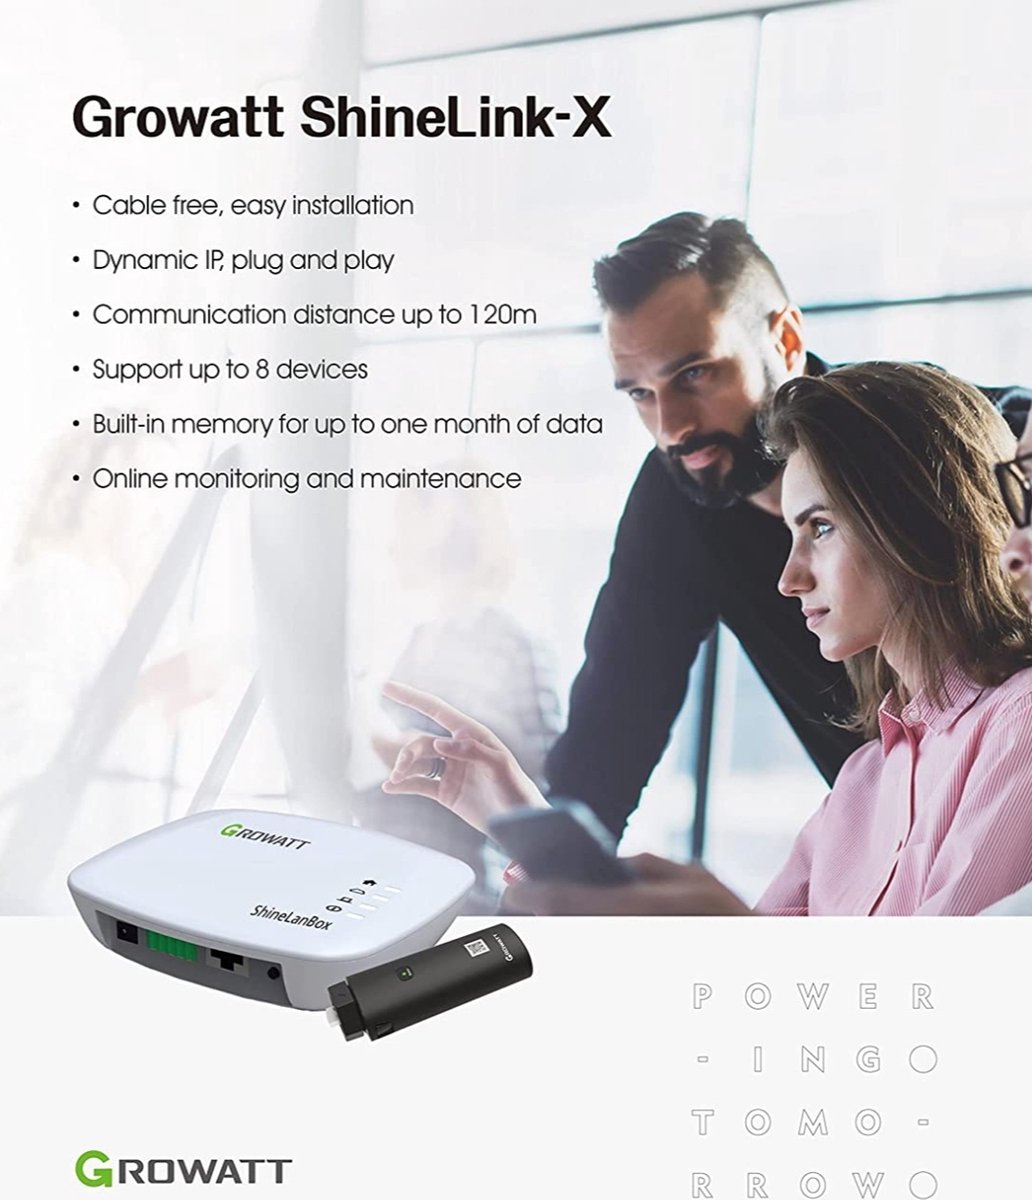 Growatt ShineLink-X